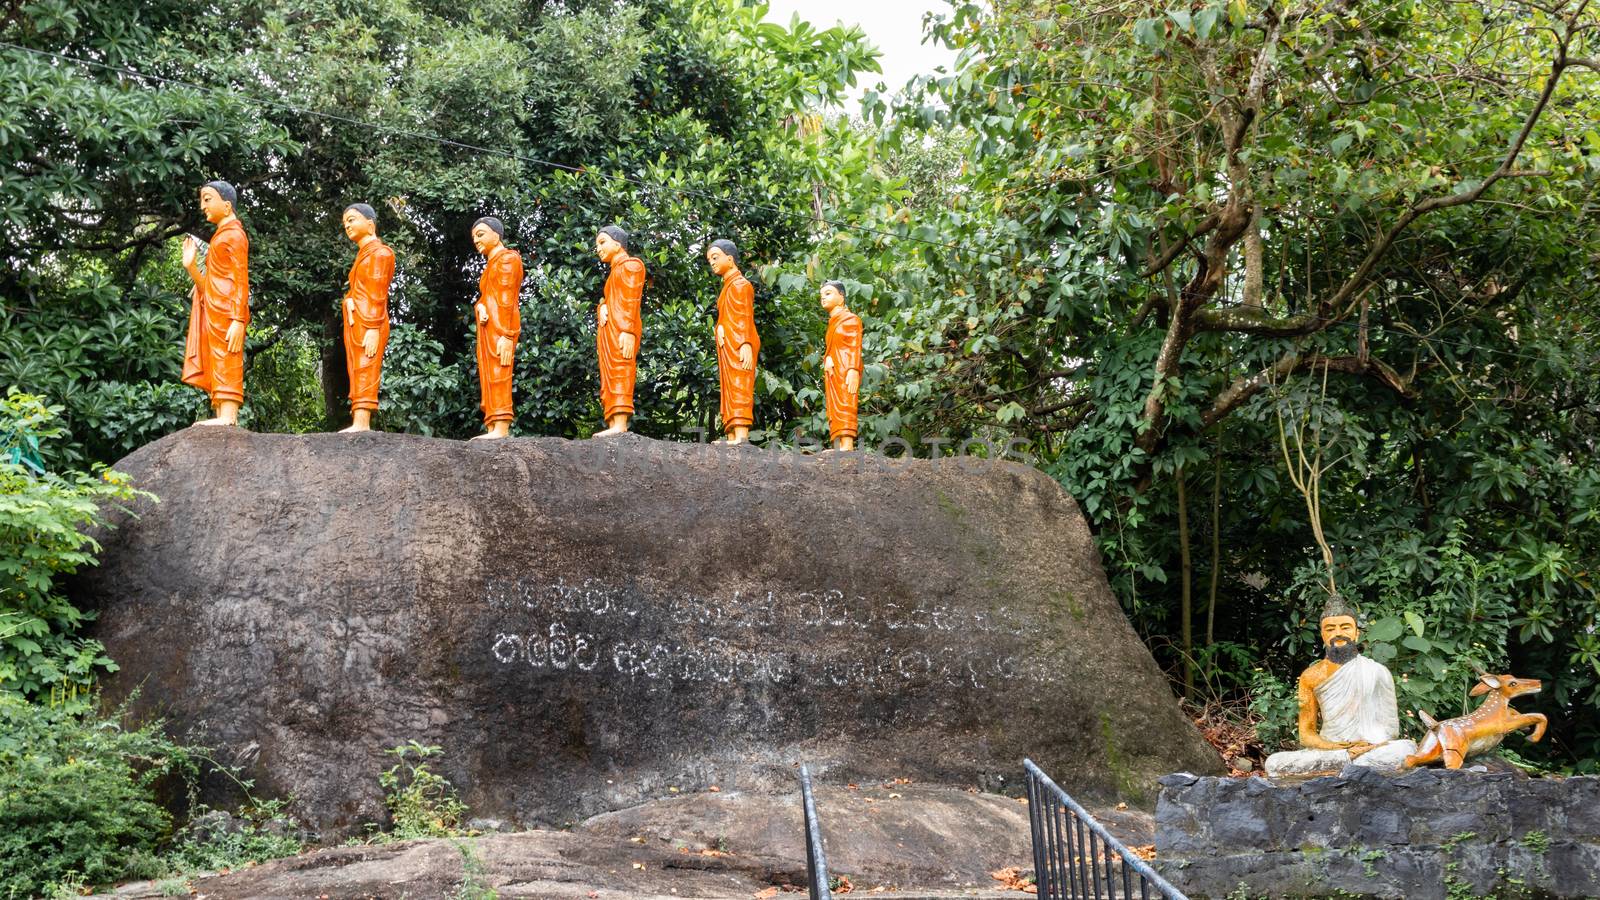 Statues on a rock in buena vista parent organization by nilanka